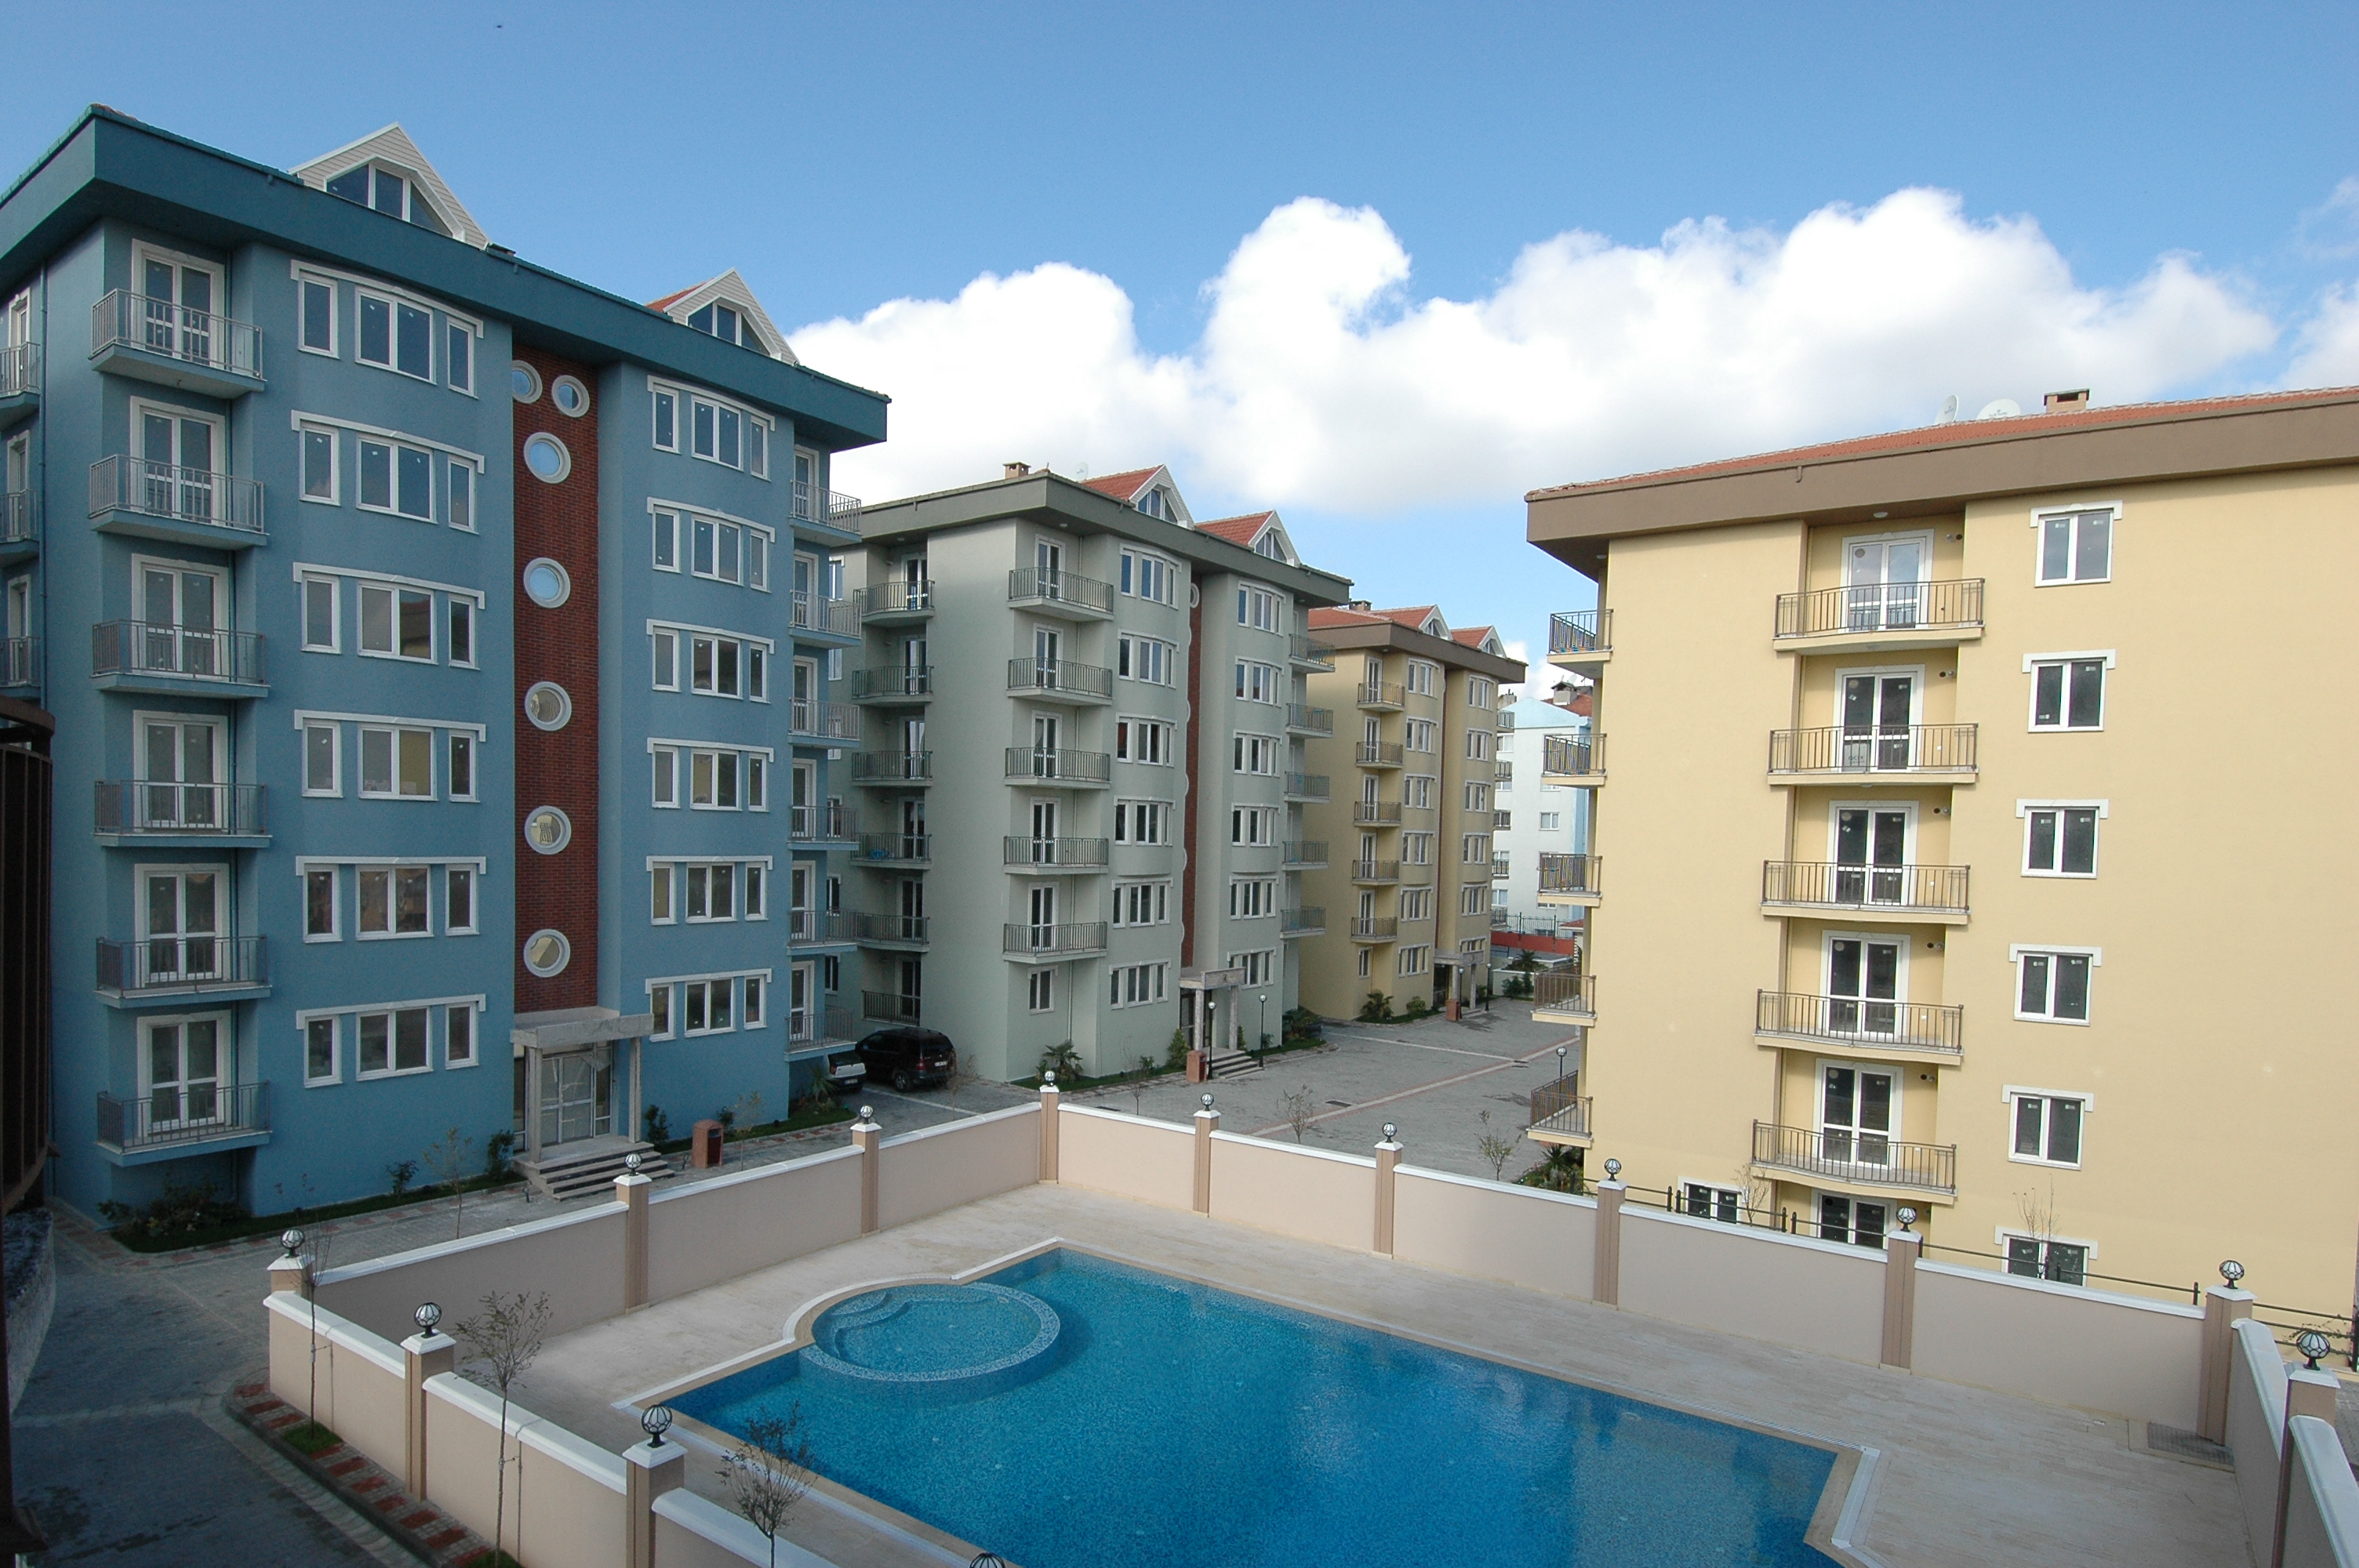 Taşpınar Evleri Apartments in Arnavutköy, Istanbul